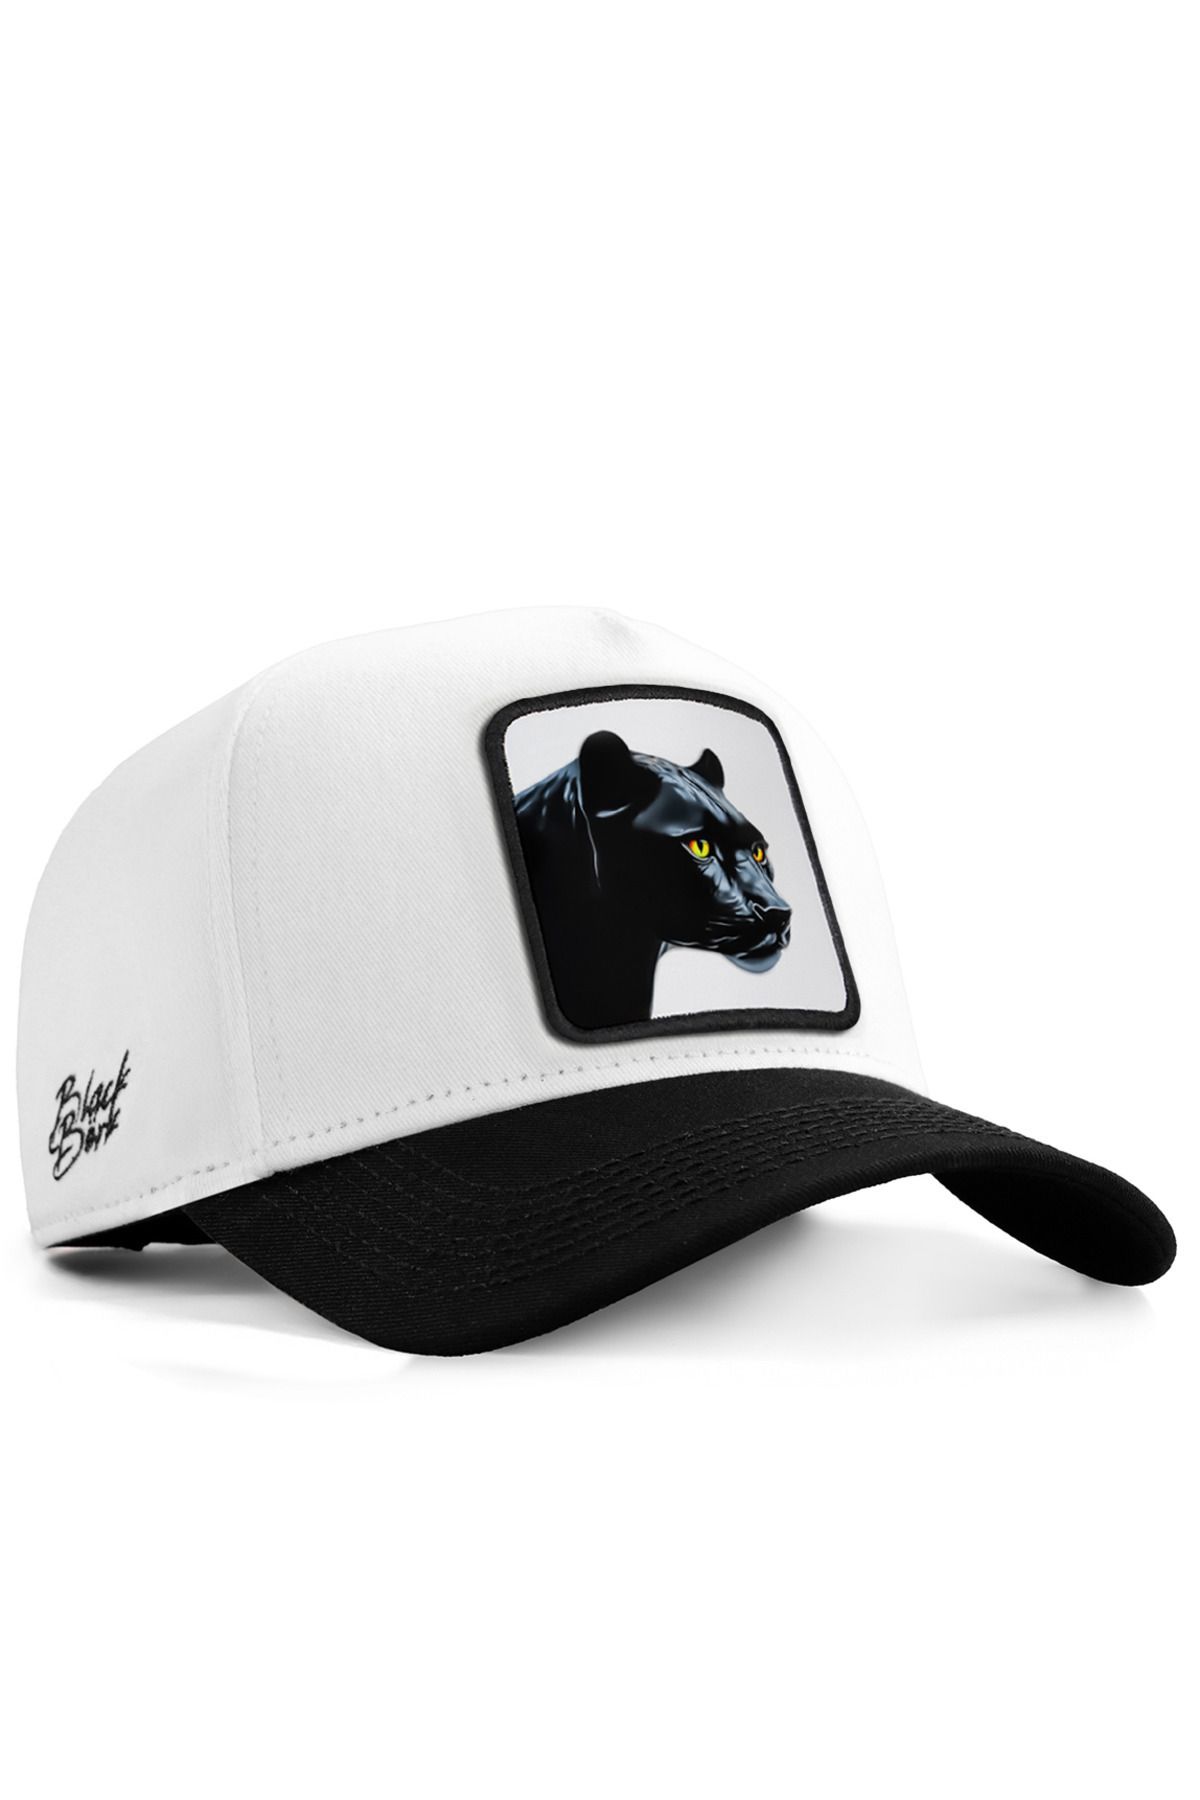 BlackBörk V1 Baseball Panter - 4bs Kod Logolu Unisex Beyaz-siyah Siperli Şapka (CAP)